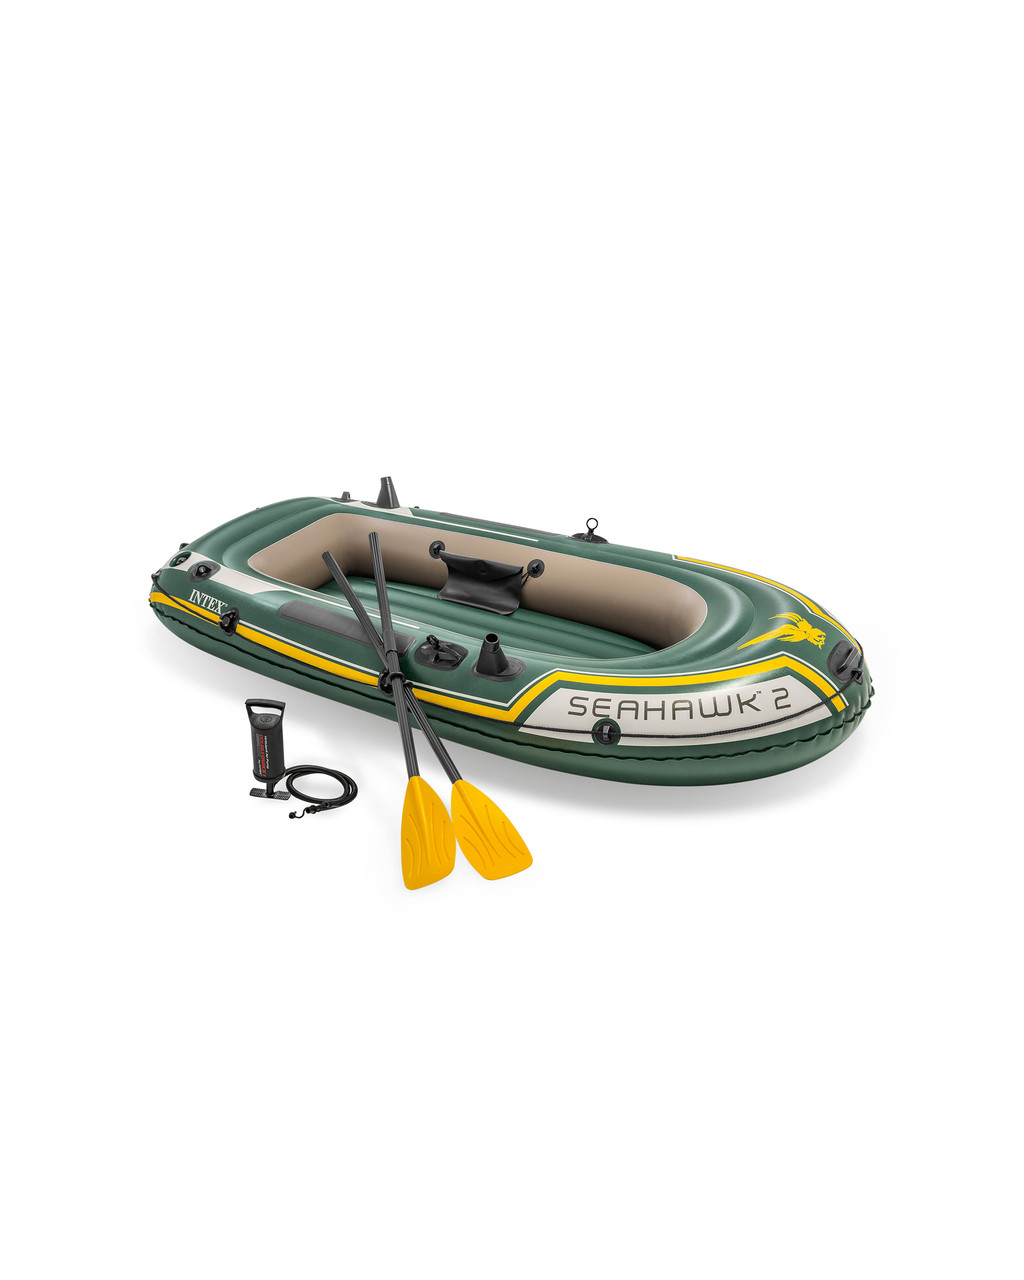 INTEX Seahawk™ 2 Inflatable Boat Set - 2 Person